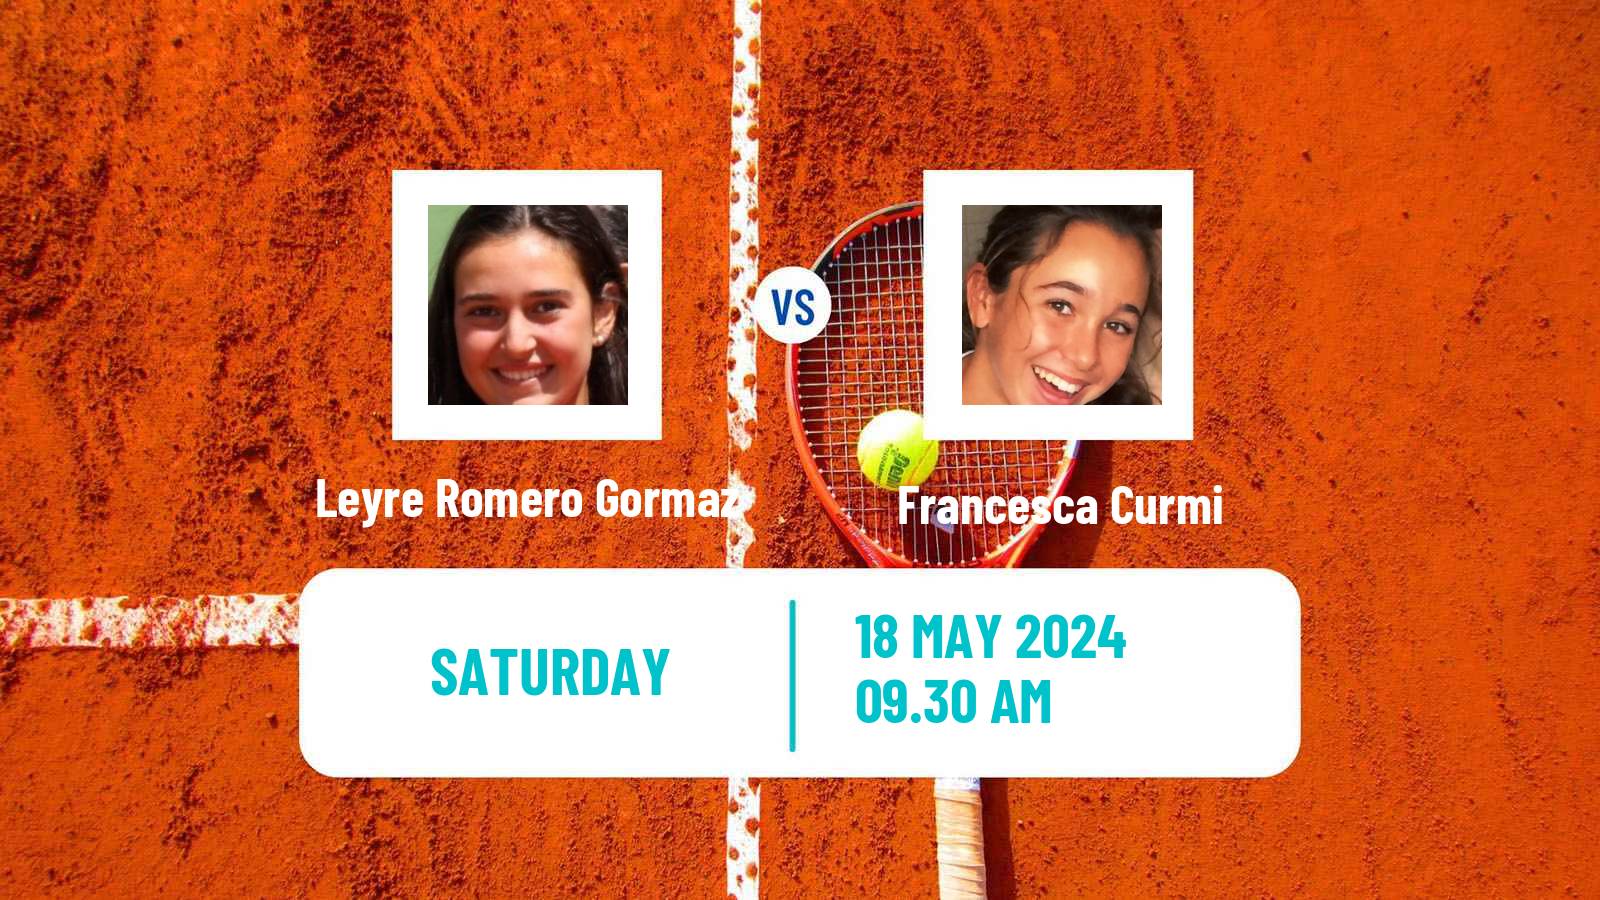 Tennis WTA Rabat Leyre Romero Gormaz - Francesca Curmi